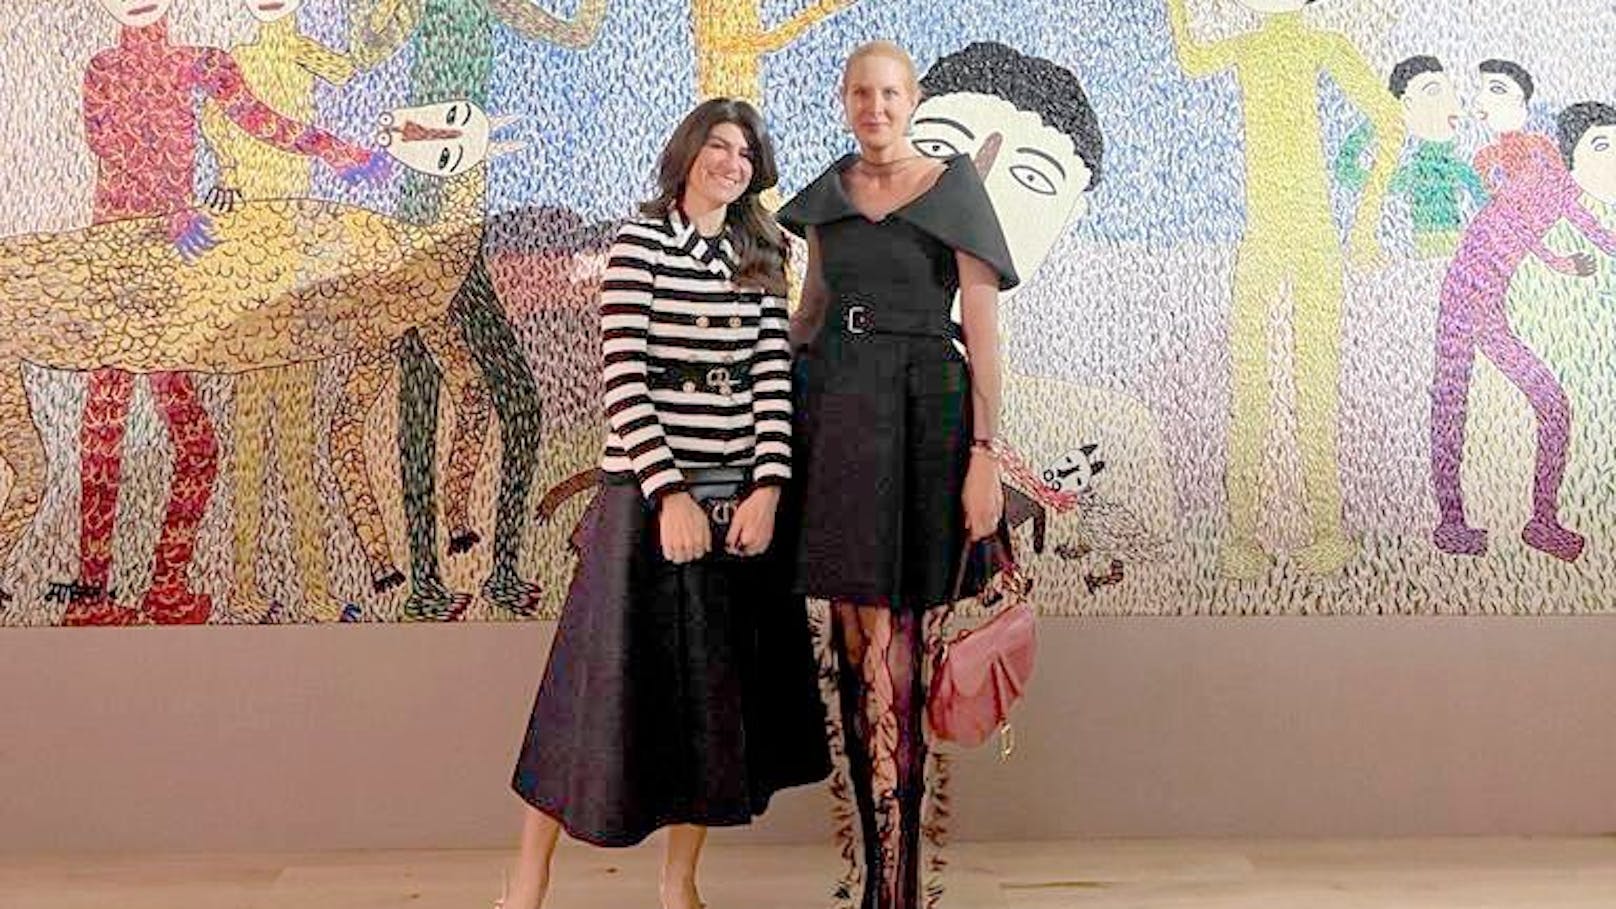 Verlegerin Eva Dichand und&nbsp;die Wiener Influencerin Sylvie Utudjian (<a href="https://www.instagram.com/uberchique/?hl=de">uberchique.com</a>) in Paris